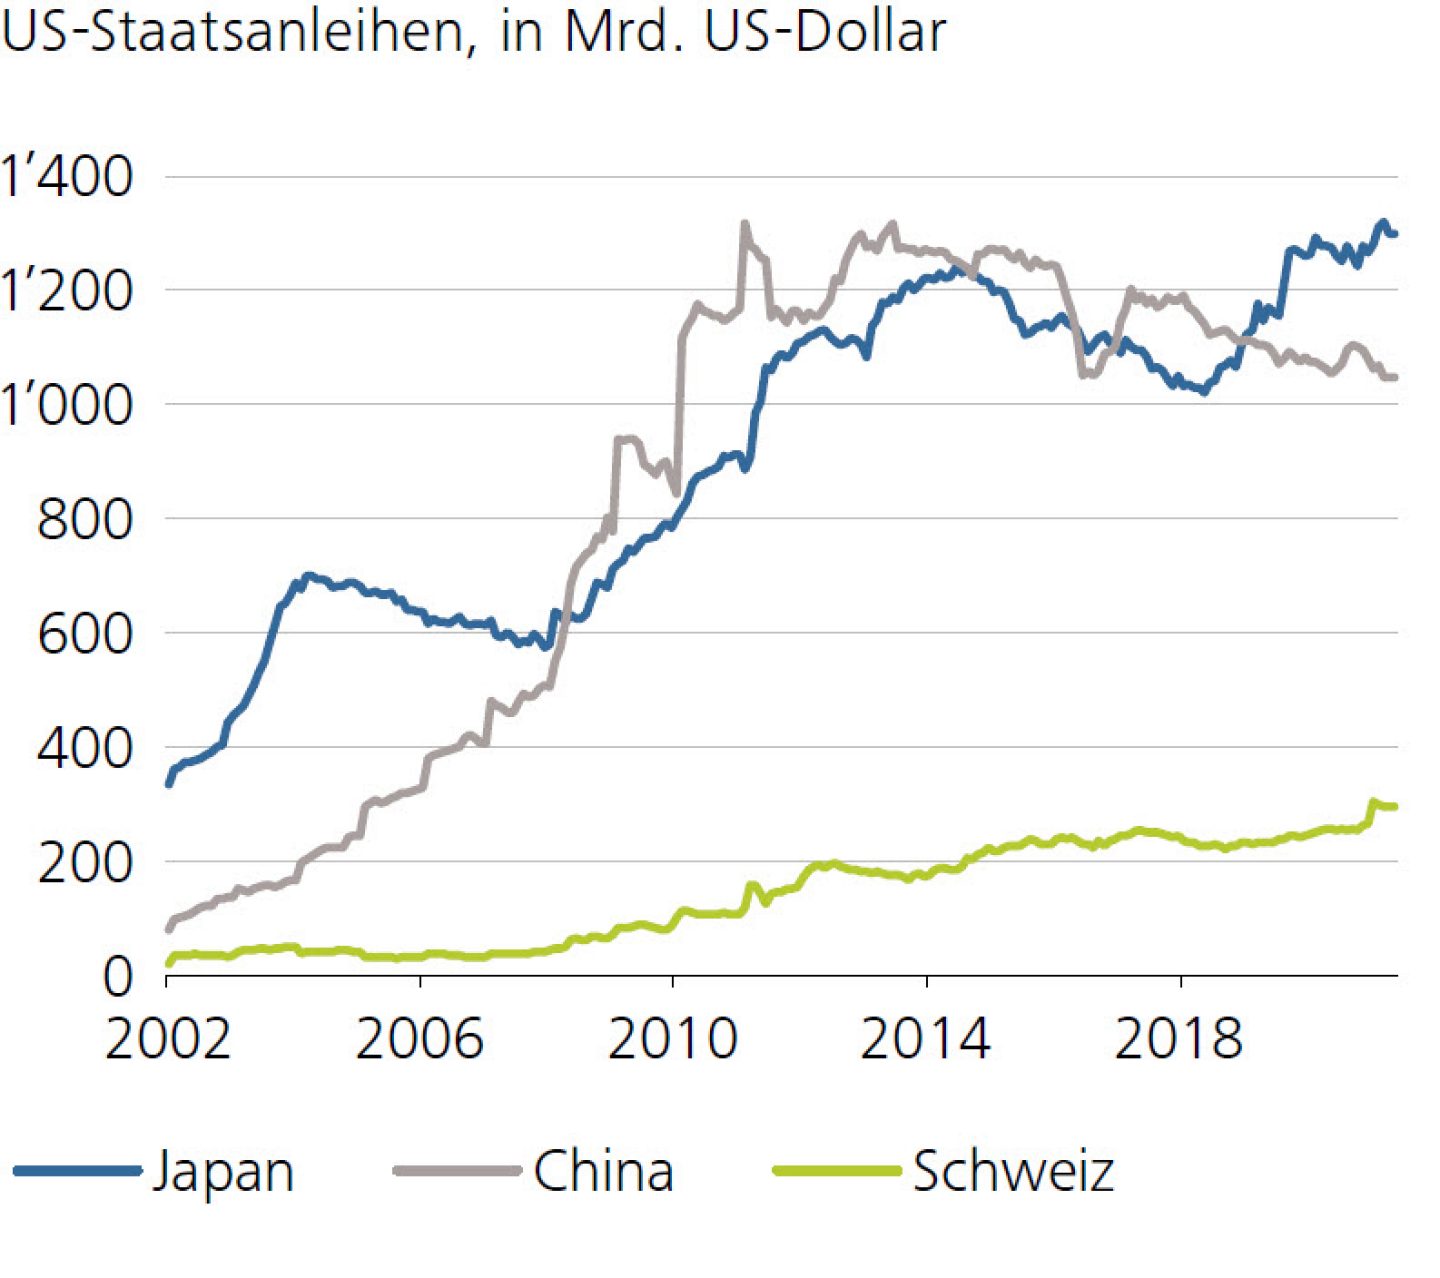 US-Staatsanleihen, in Mrd. US-Dollar